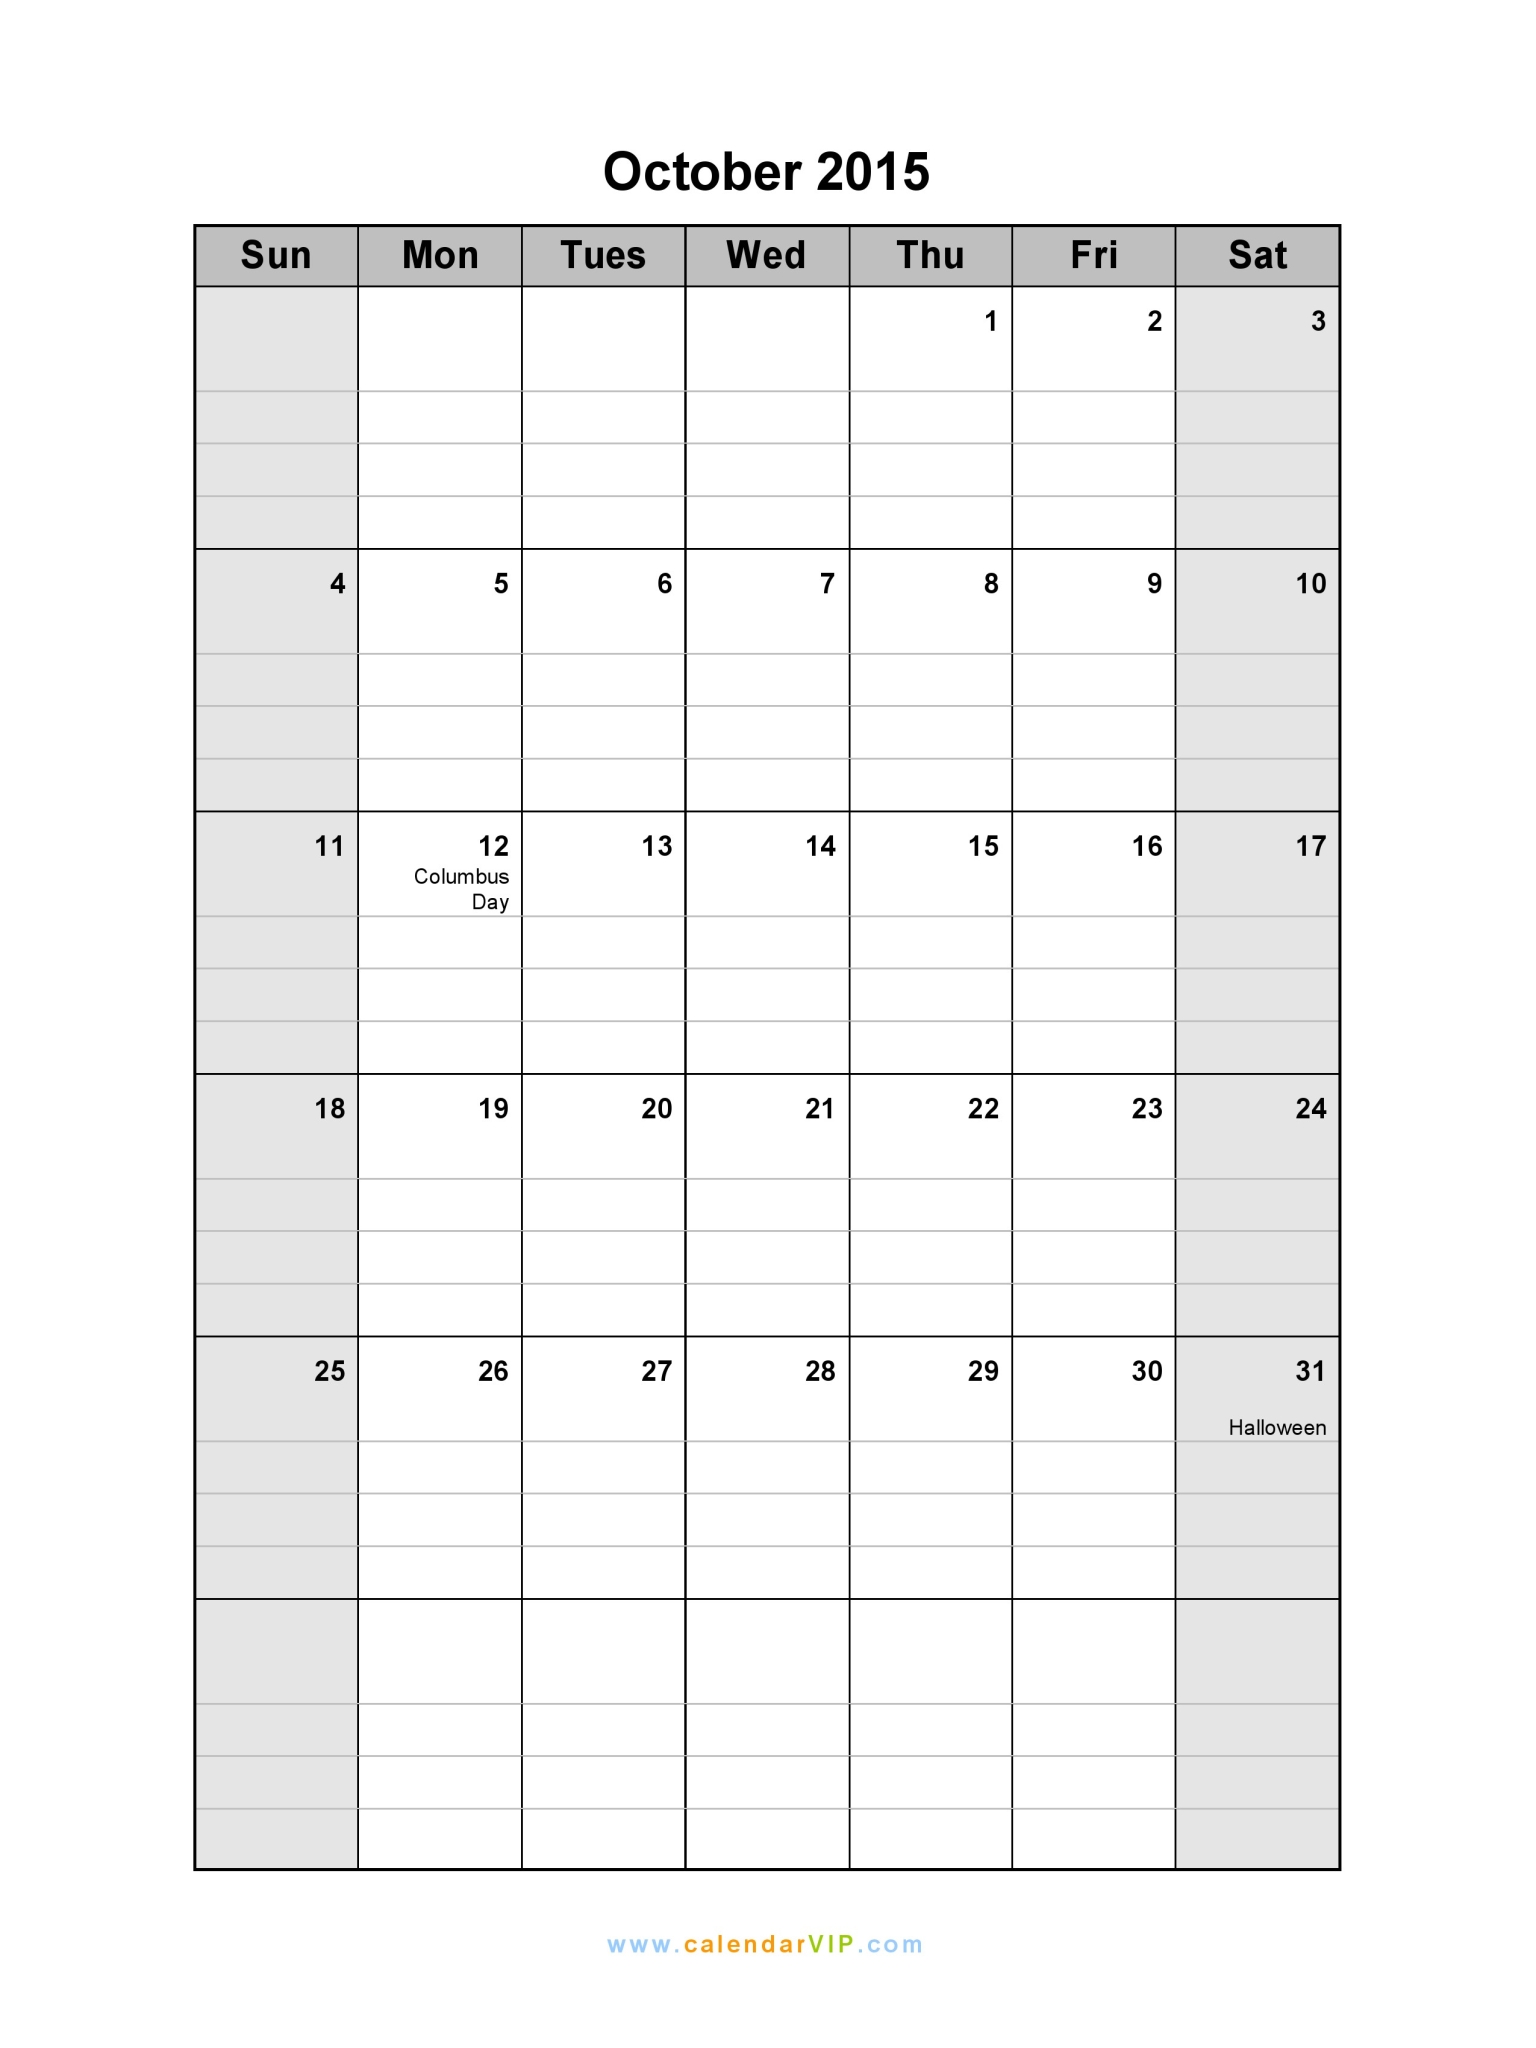 October 2015 Calendar - Blank Printable Calendar Template in PDF Word Excel1536 x 2048